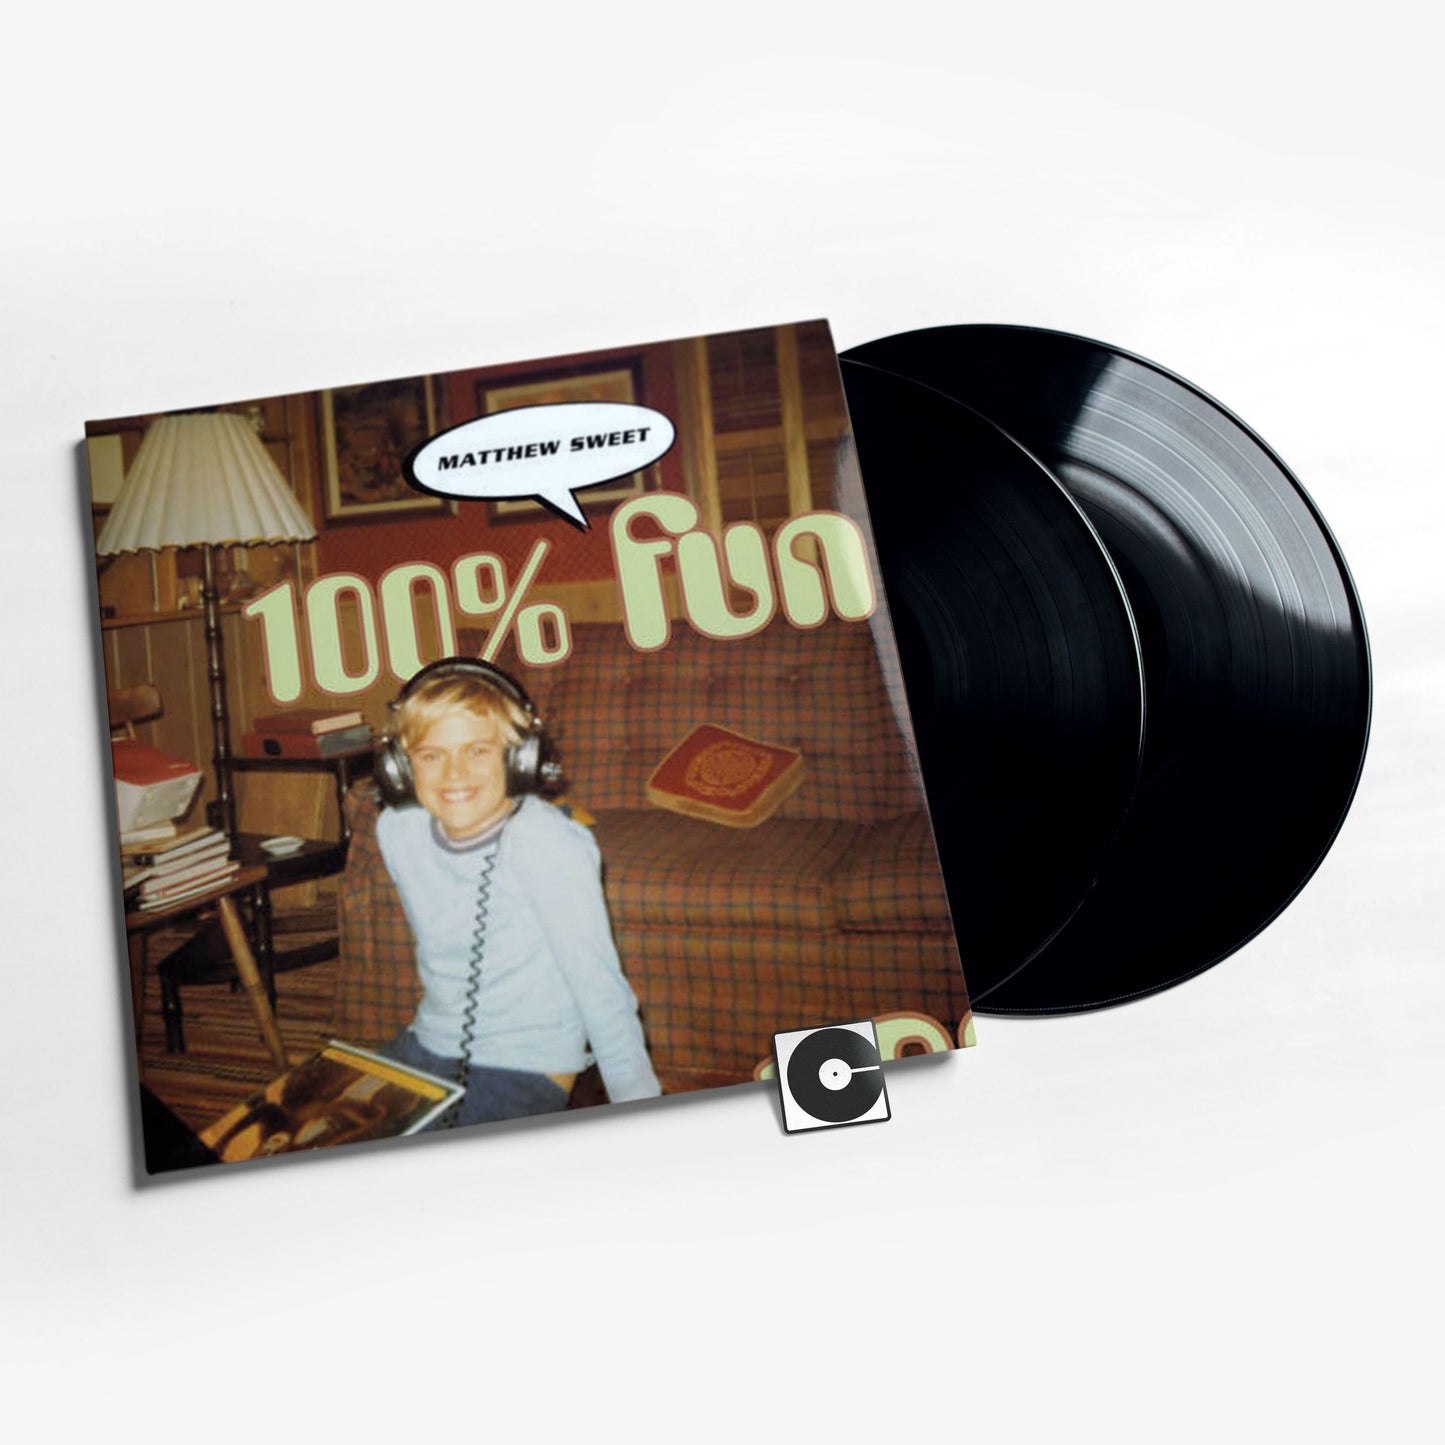 Matthew Sweet - "100% Fun" Intervention Records